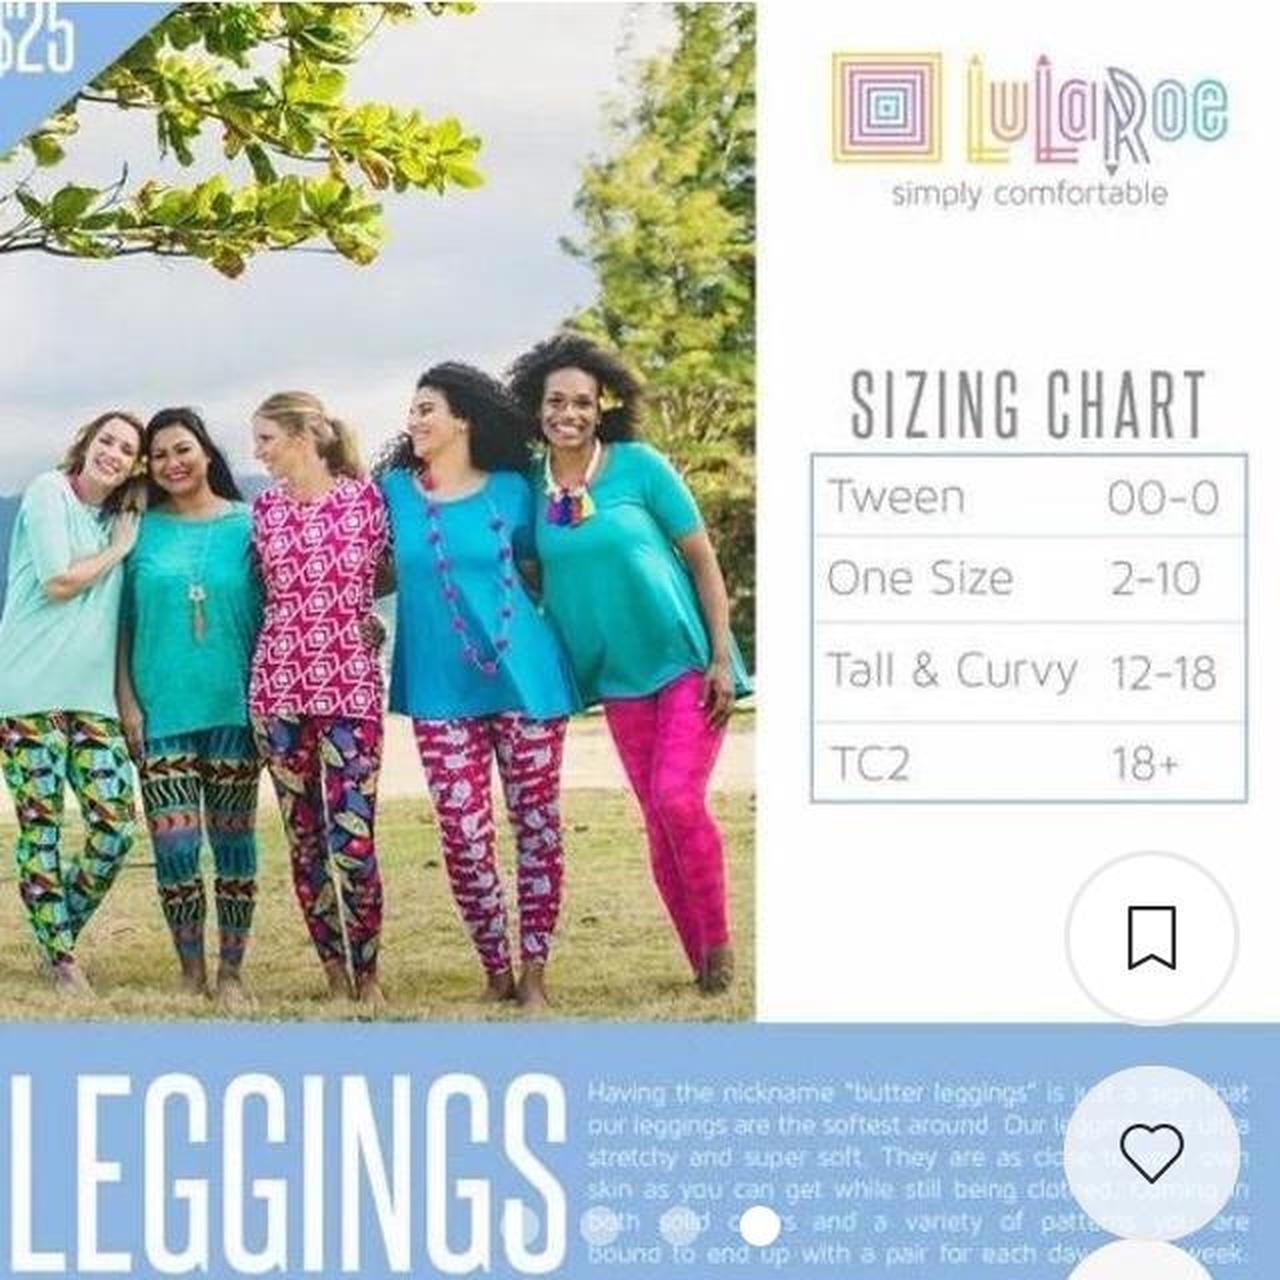 LuLaRoe OS (One Size) leggings., Great patterns and